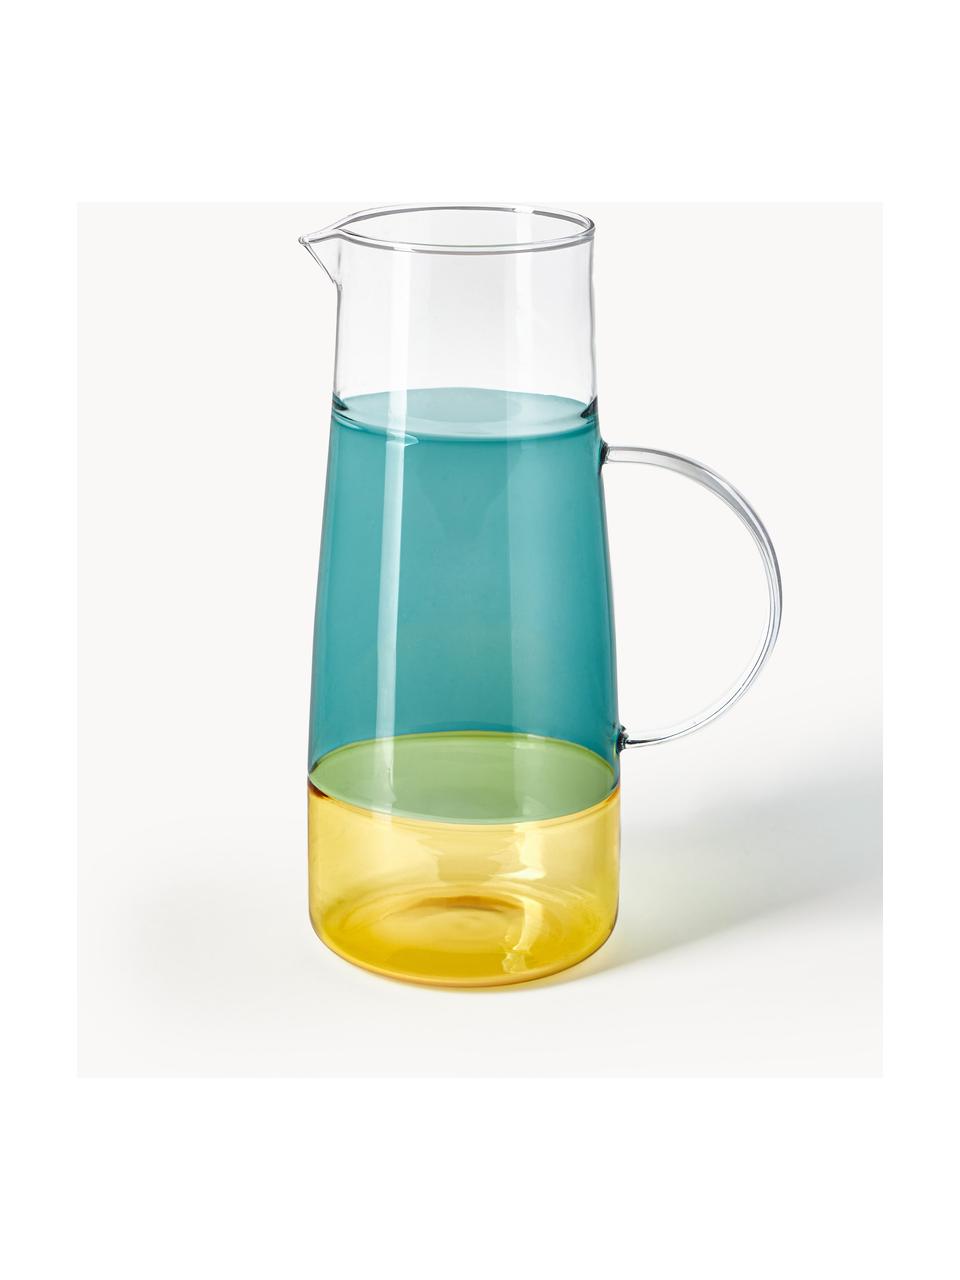 Mondgeblazen karaf Lemonade, 1.3 L, Glas, Donkergroen, geel, 1.3 L